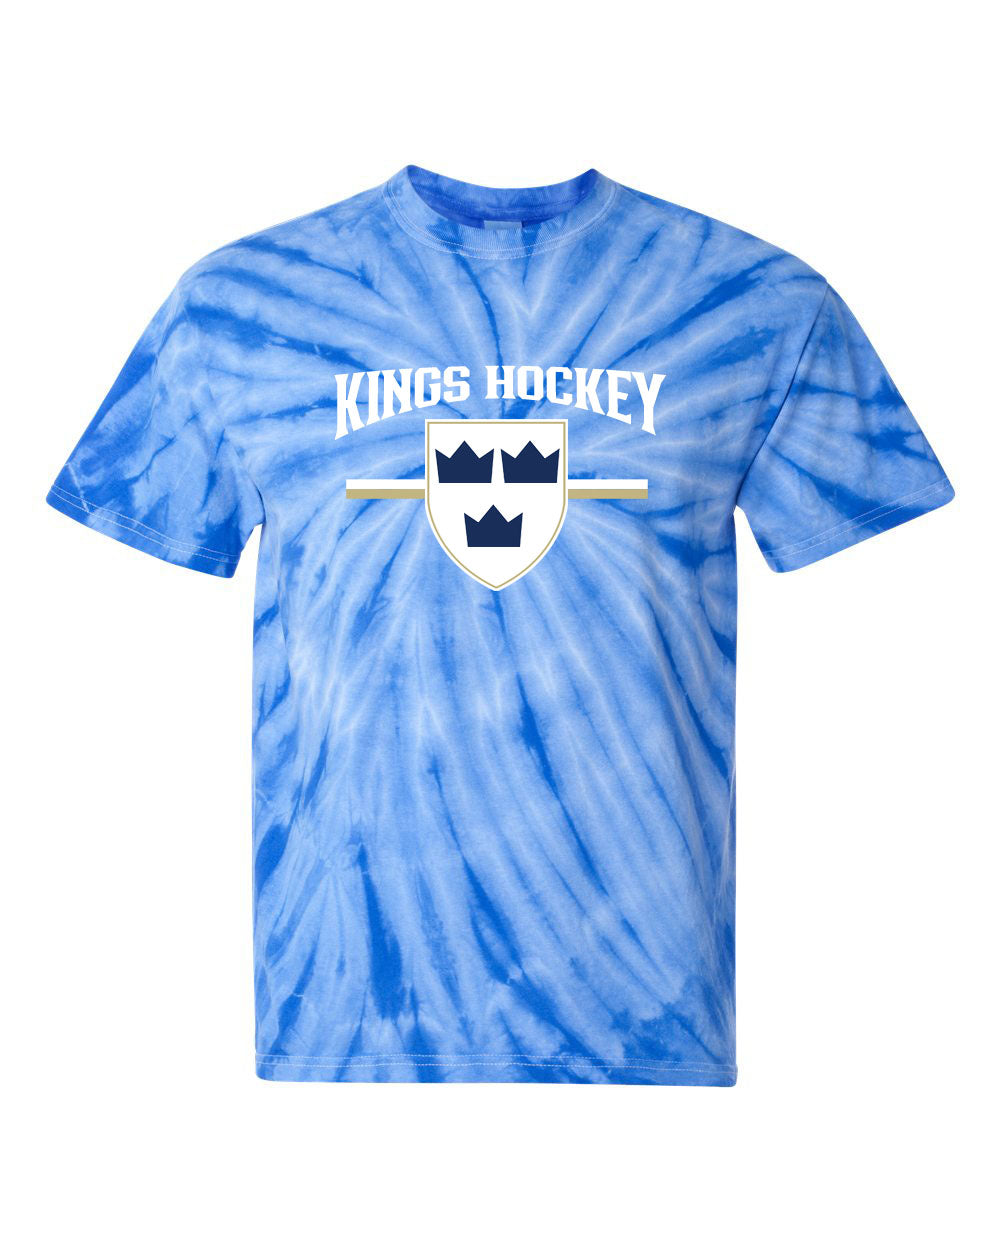 Kings Hockey Tie Dye t-shirt Design 5